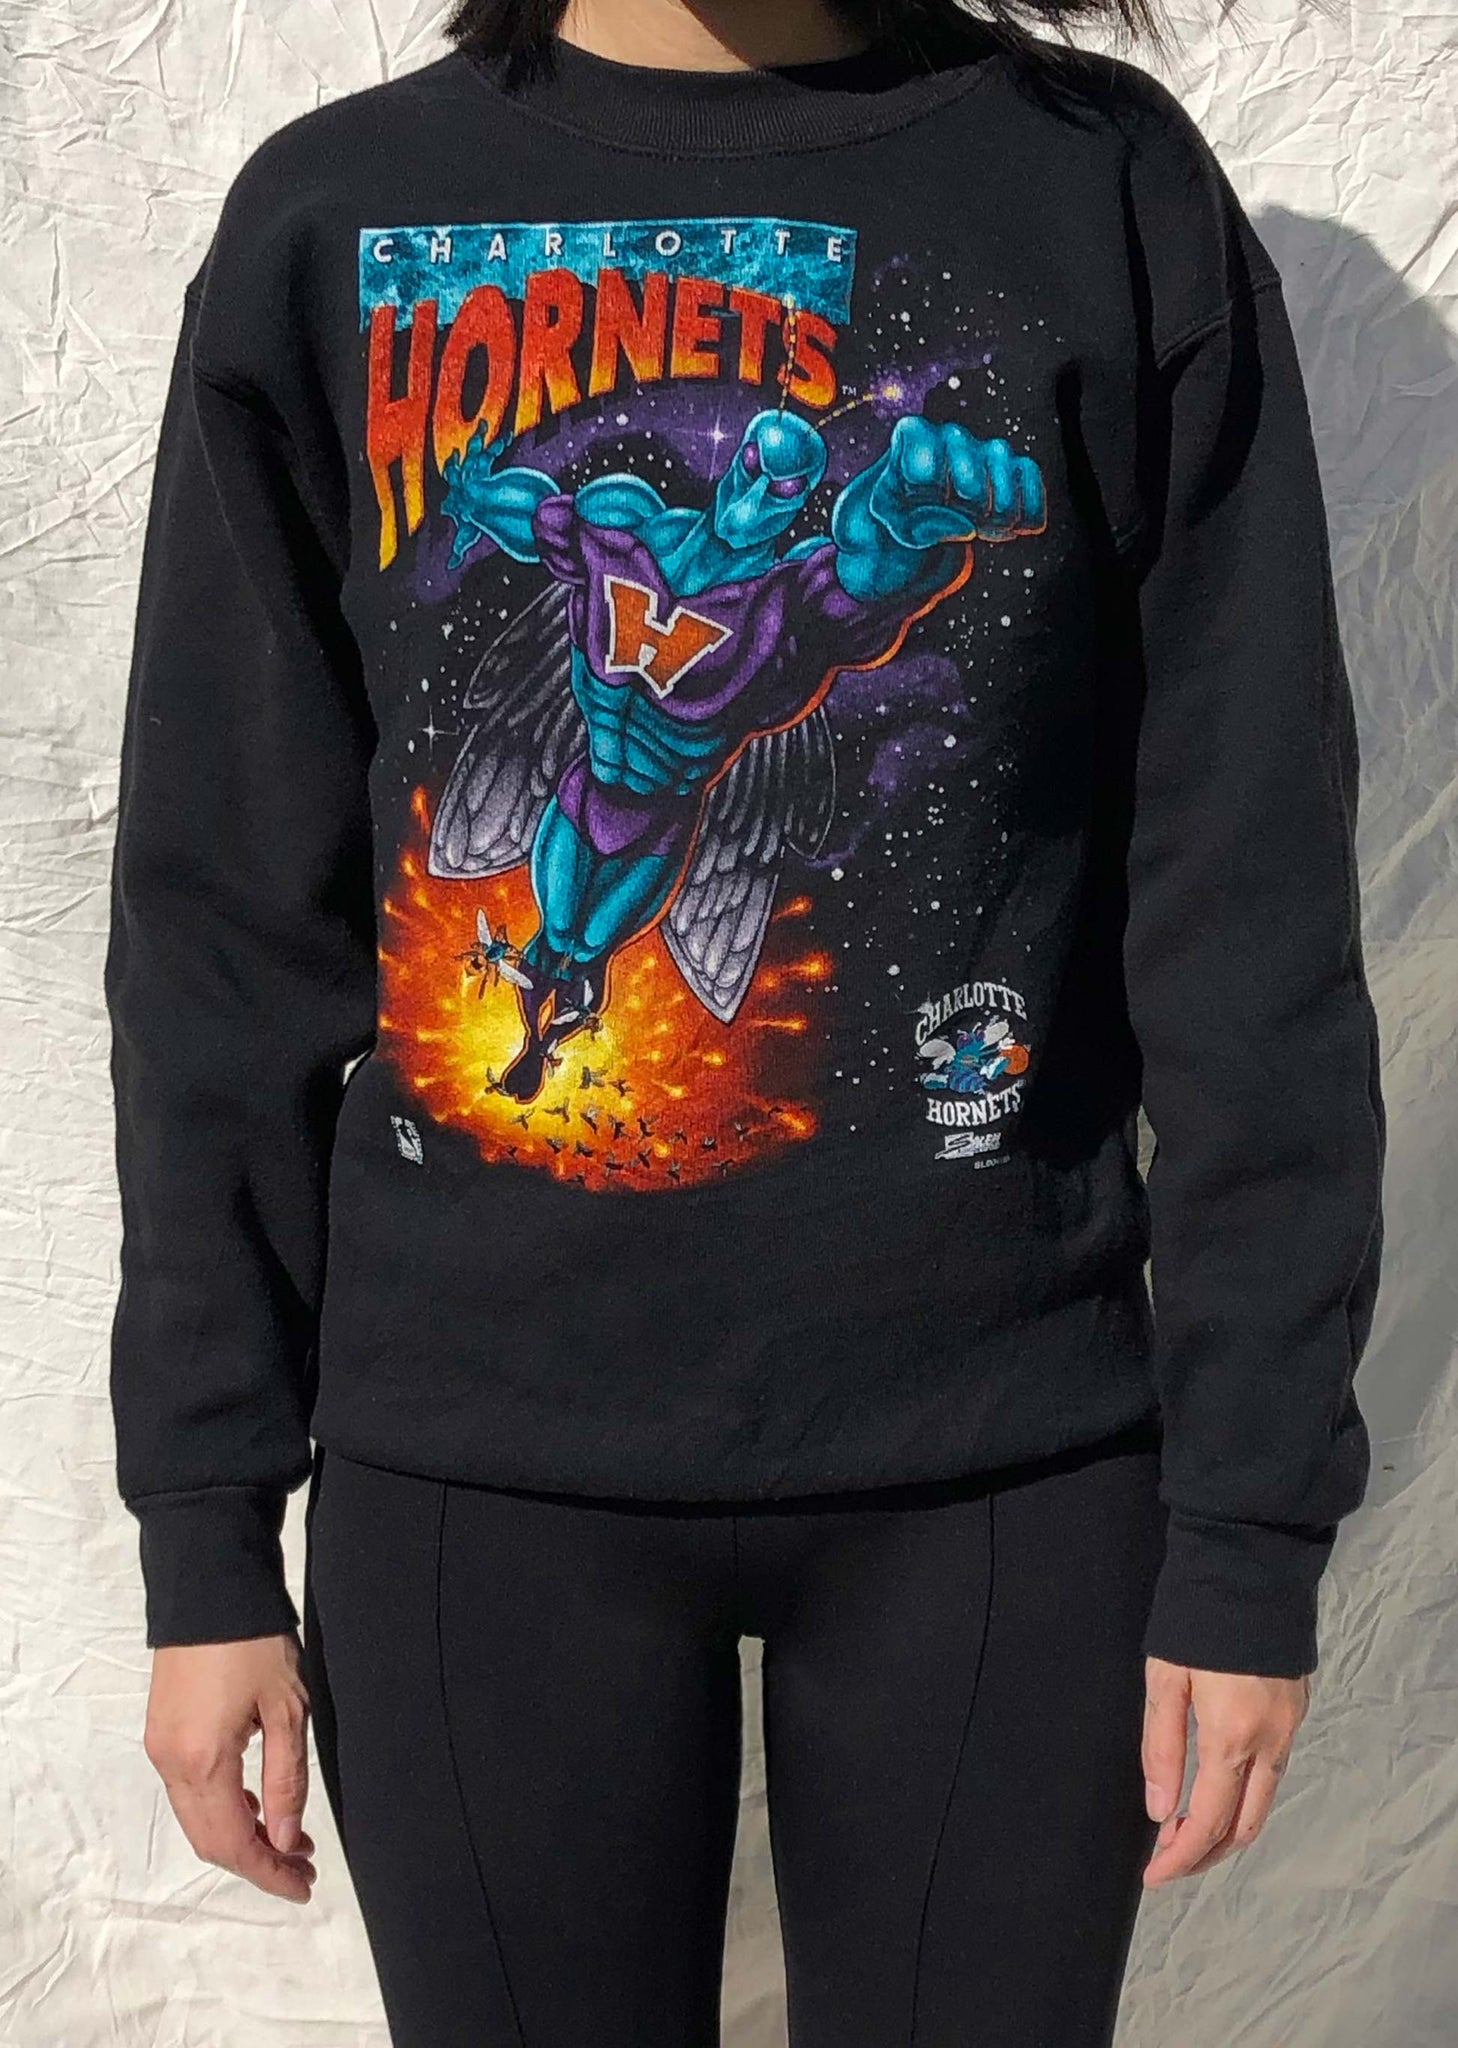 Charlotte Hornets 90s Sweatshirt 